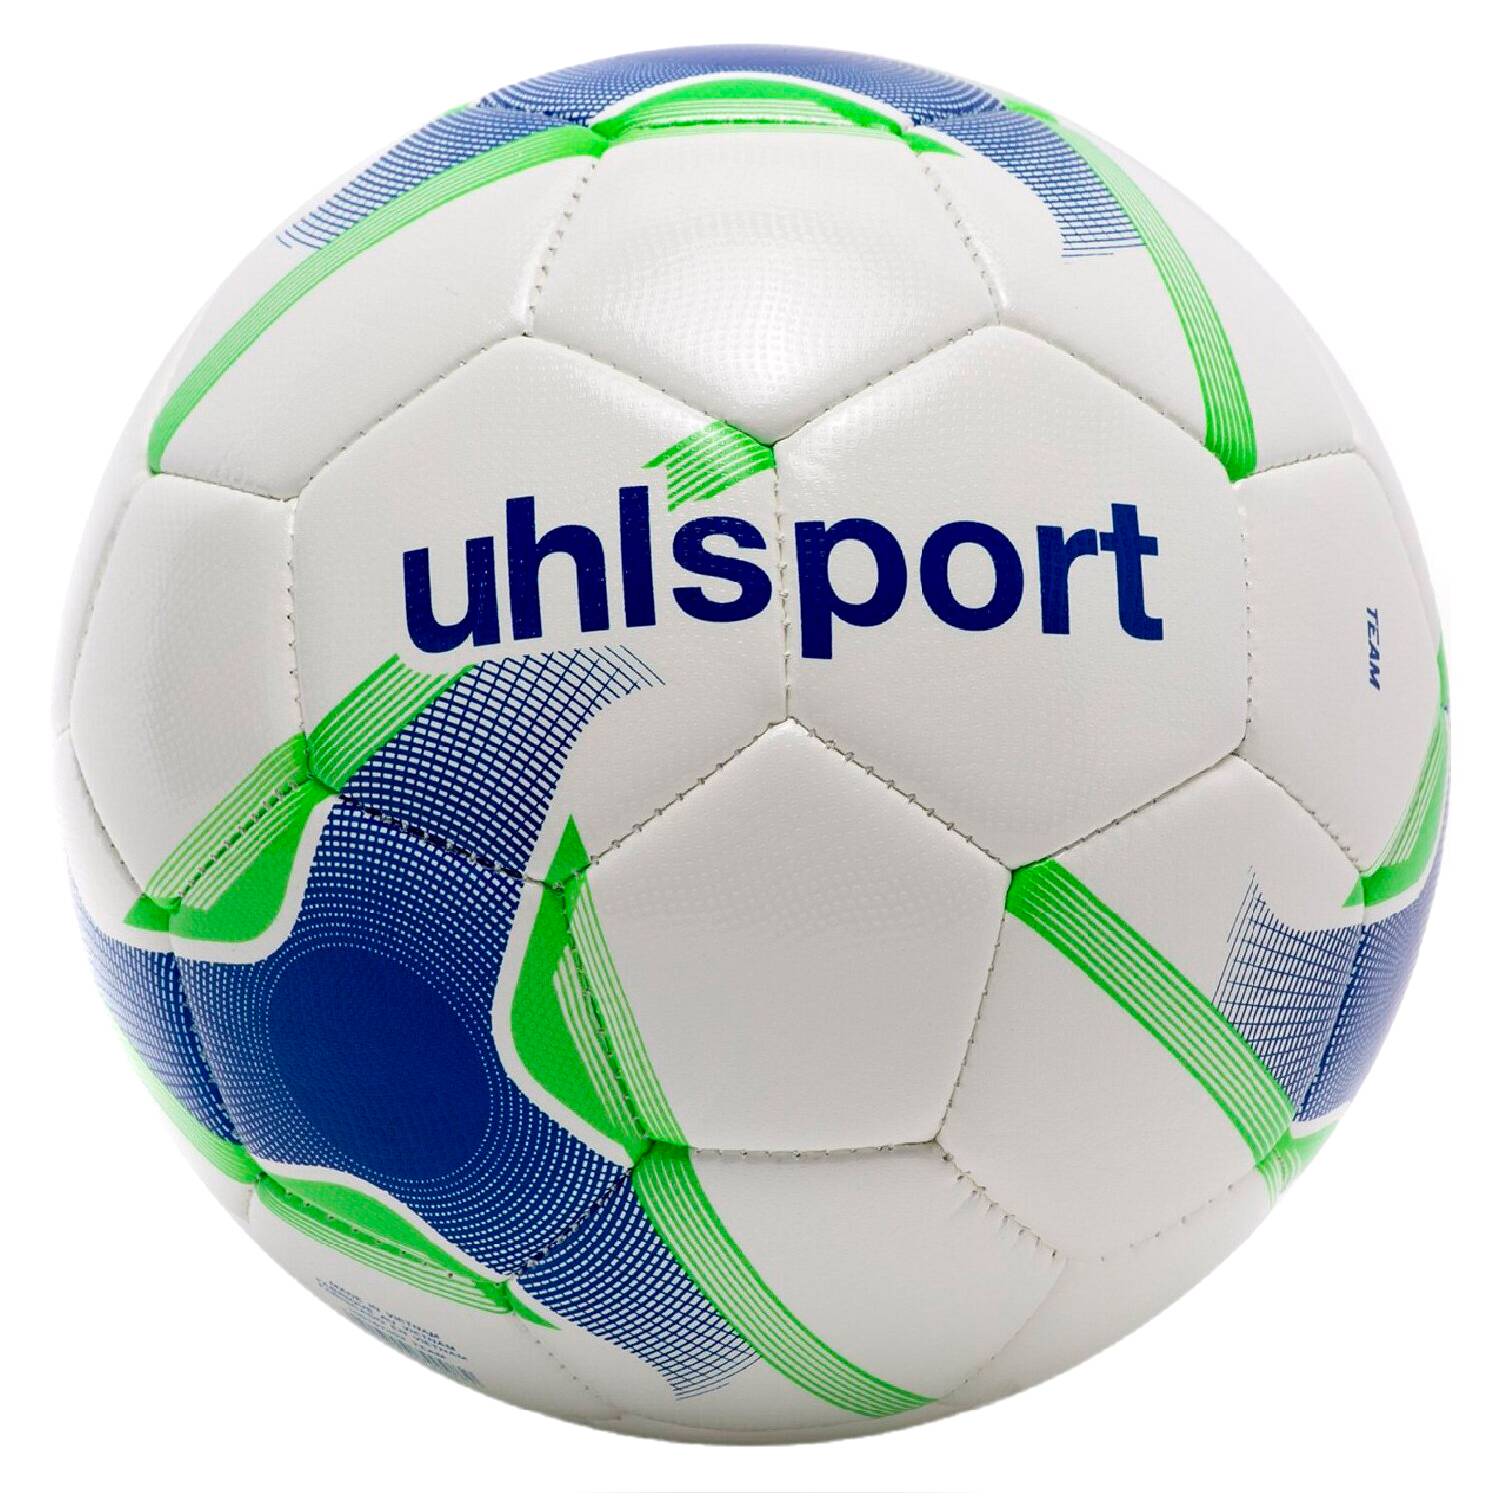 Uhlsport Infinity 350 Lite 2.0 Balones de Fútbol Hombre